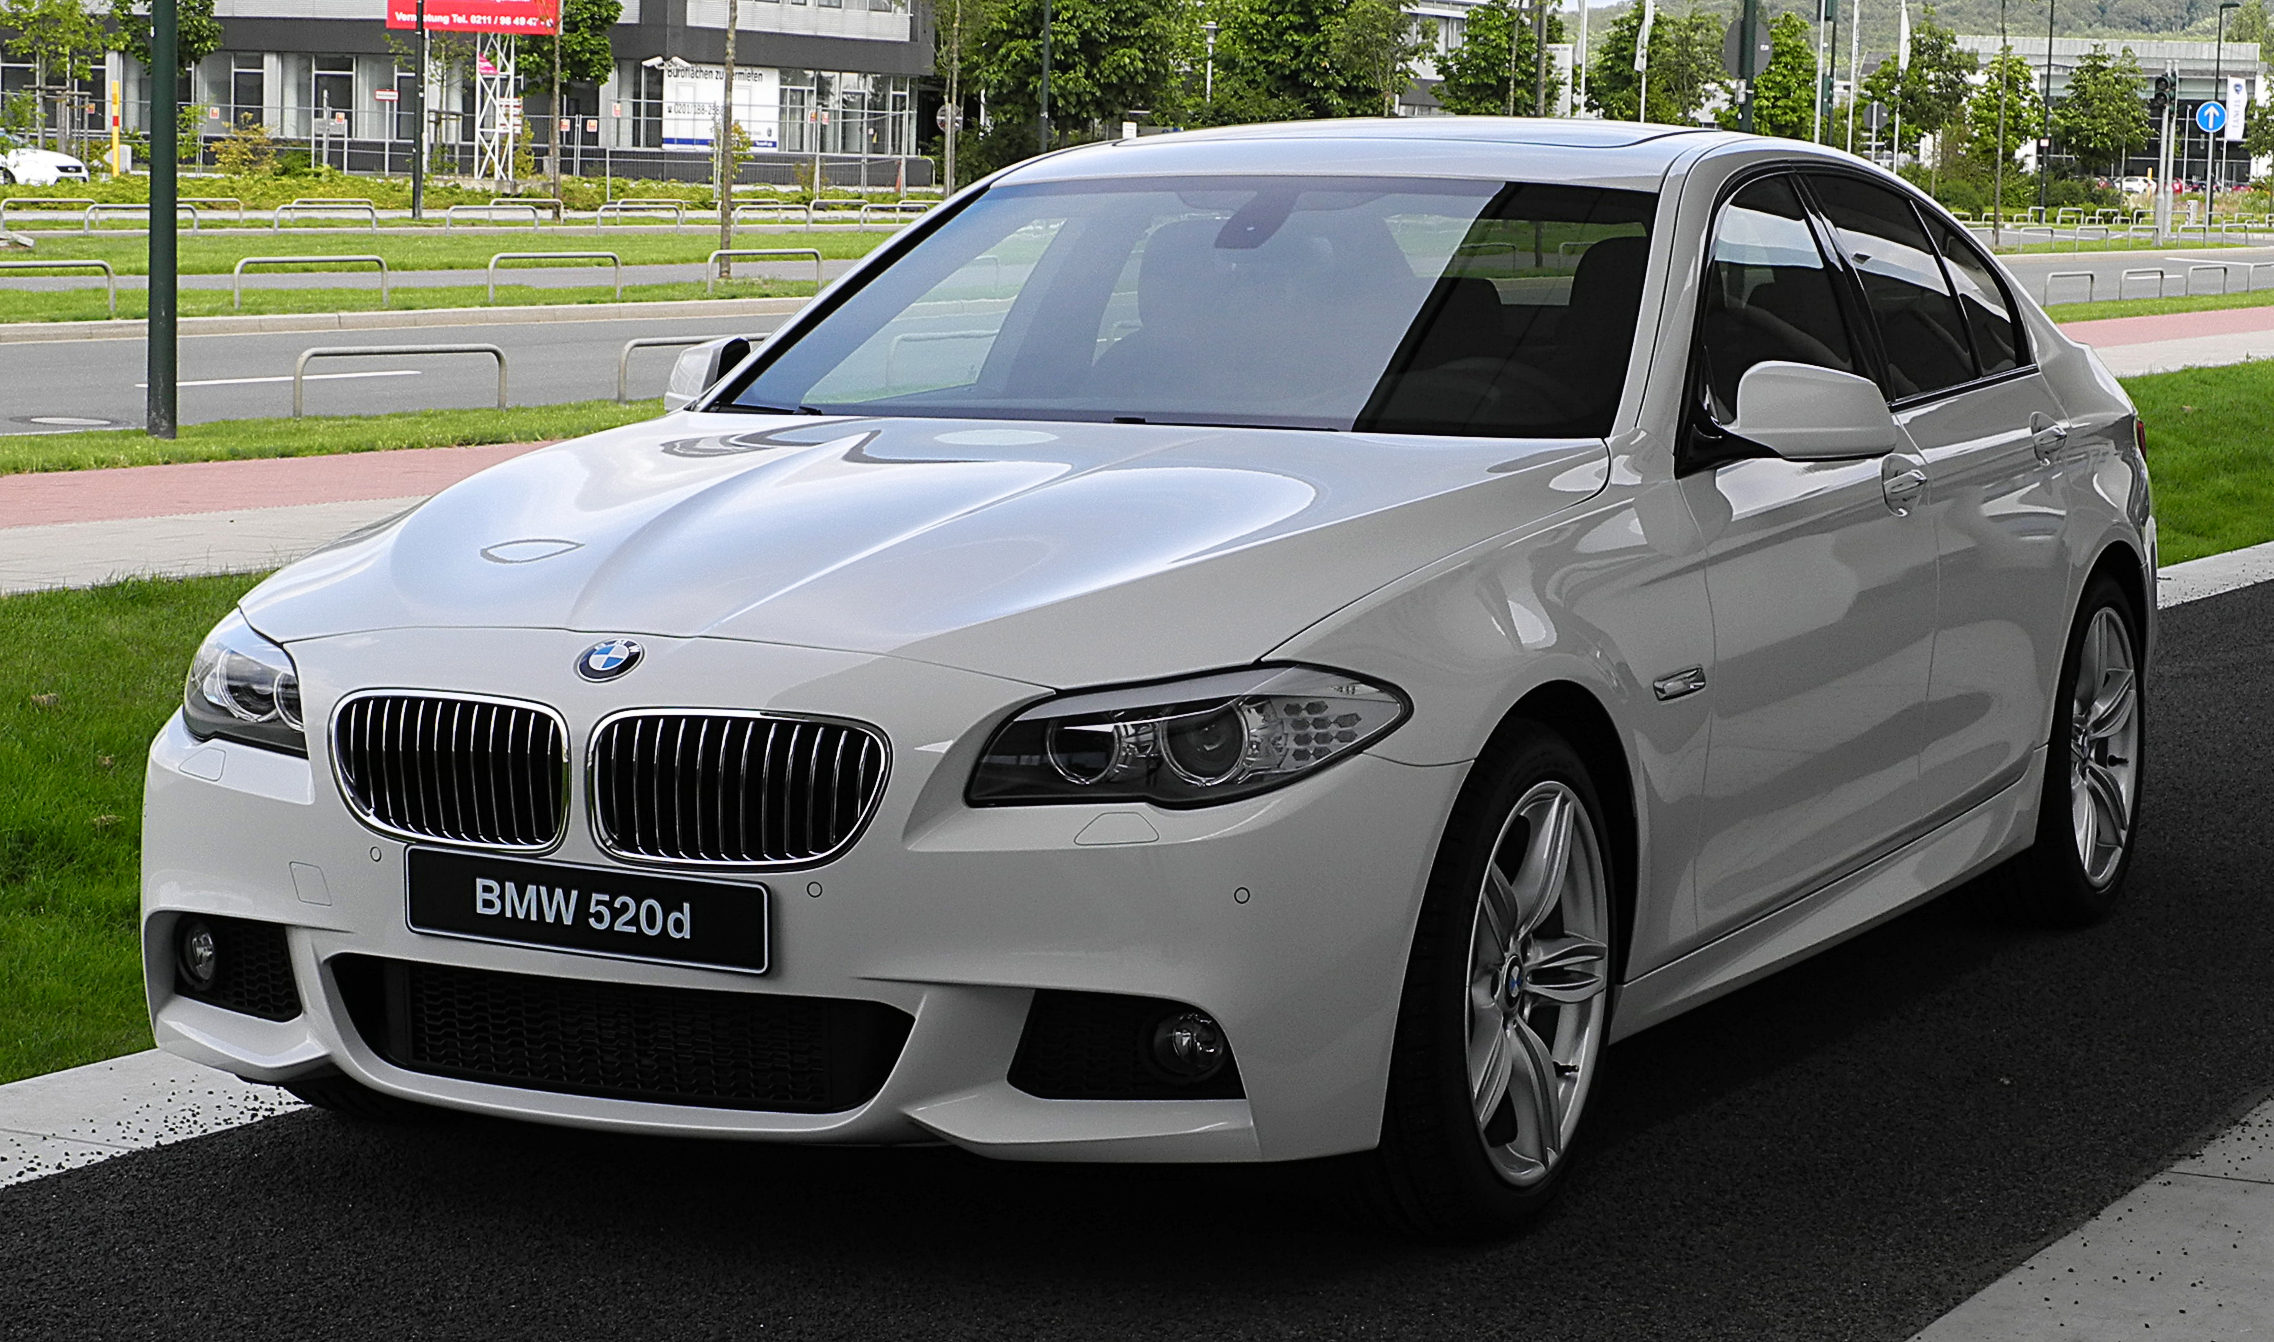 File:BMW 520d M-Sportpaket (F10) – Frontansicht, 2. Juli 2011